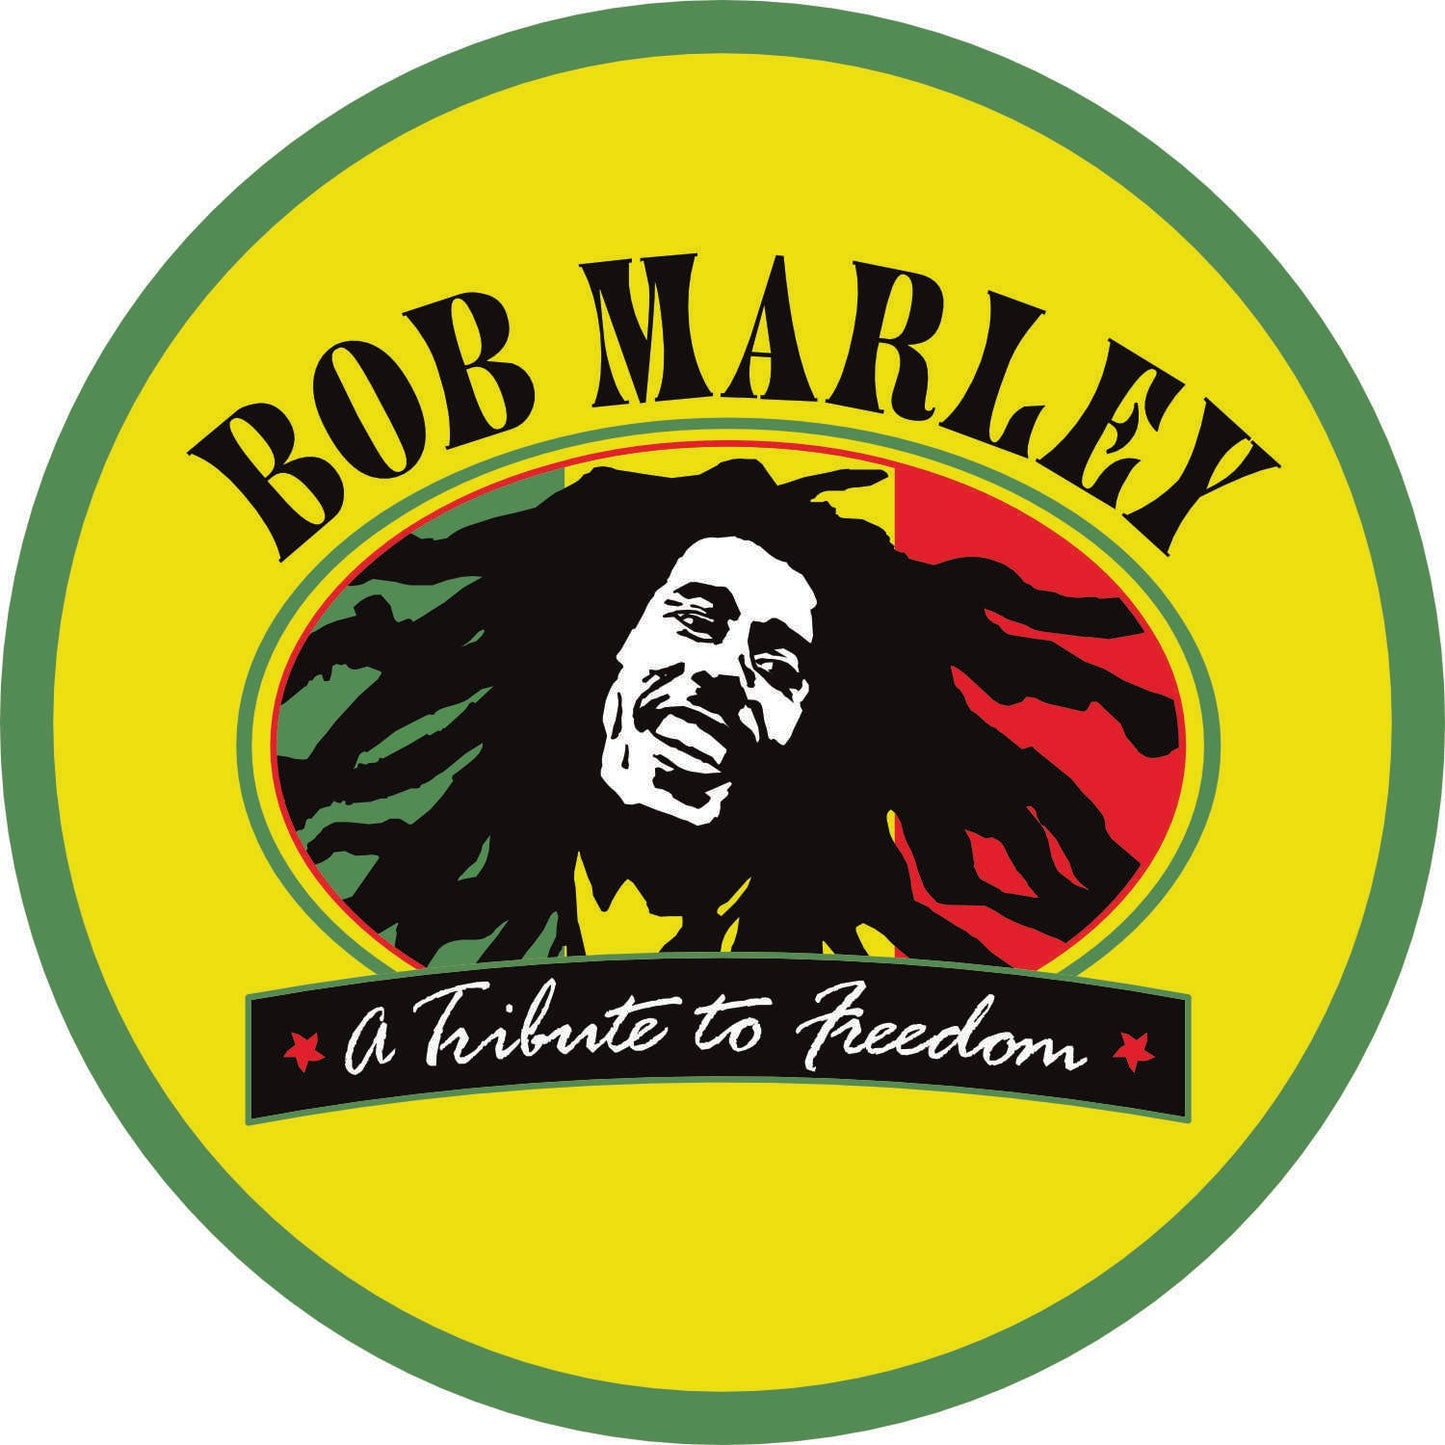 027-Single-sided illuminated sign - Bob Marley